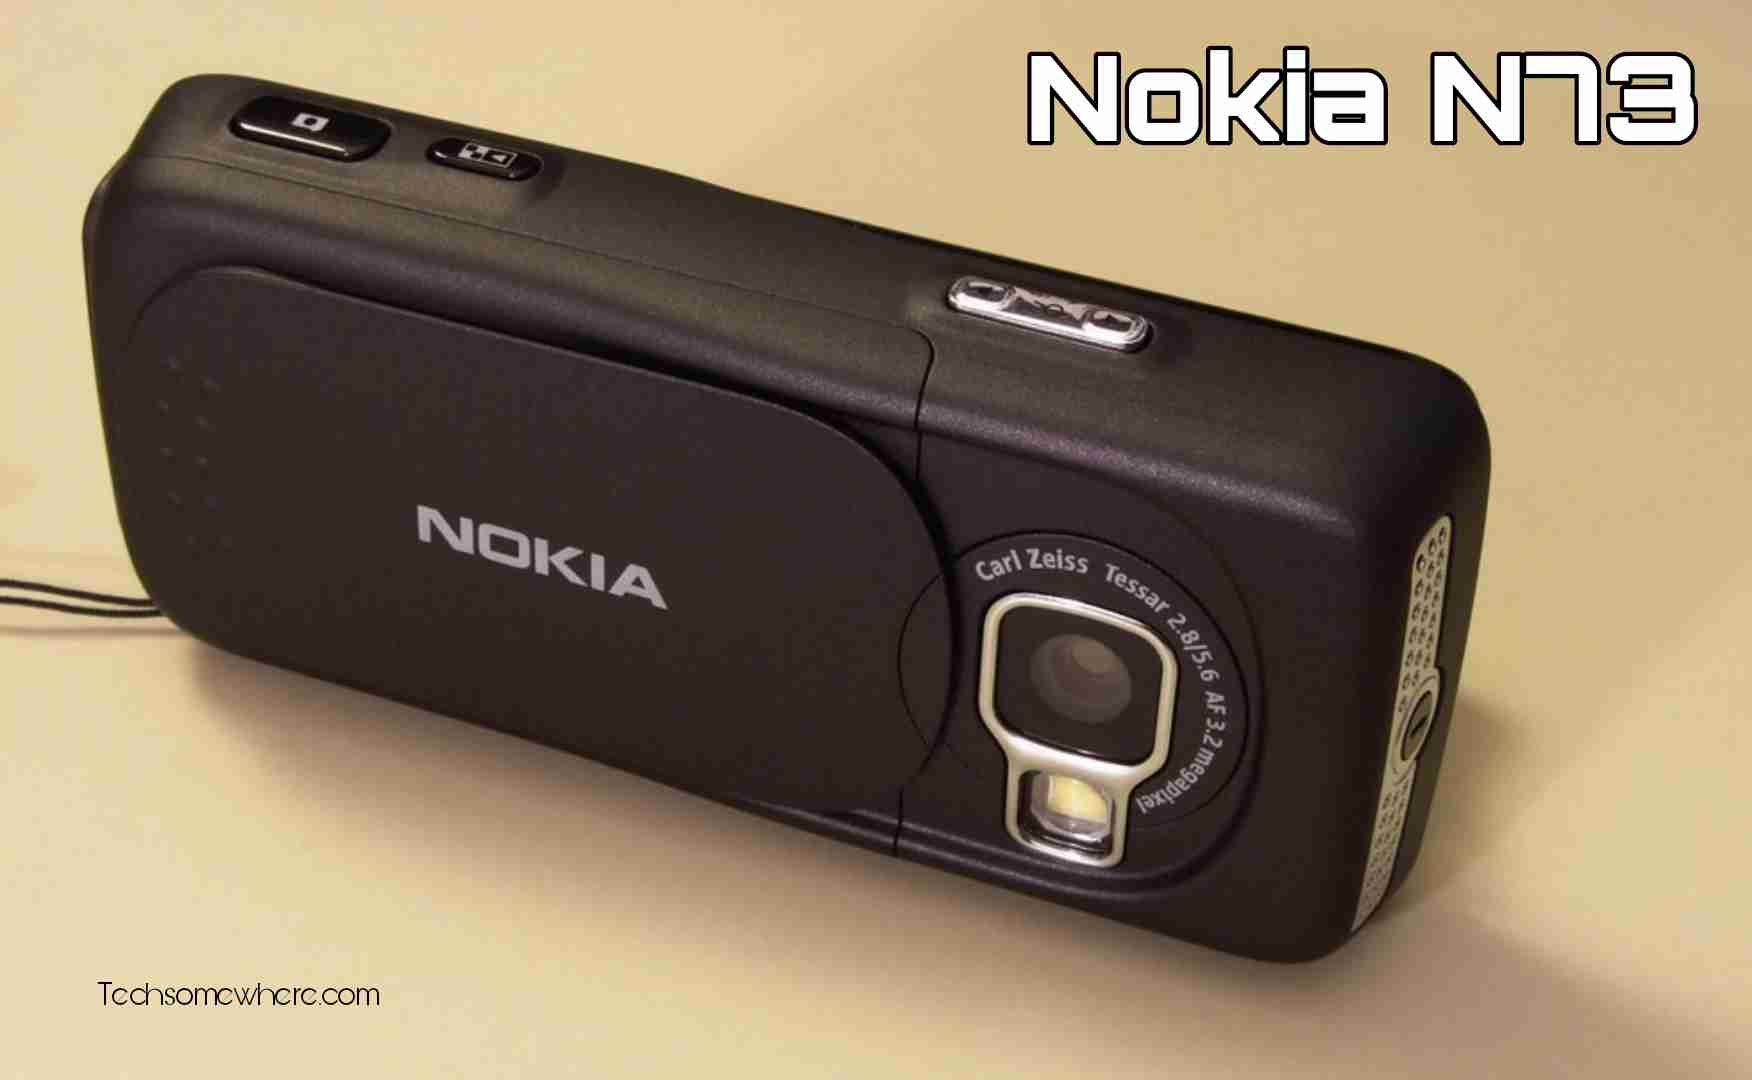 Nokia N73 Features, Rumours & Reasonable Price 2022!